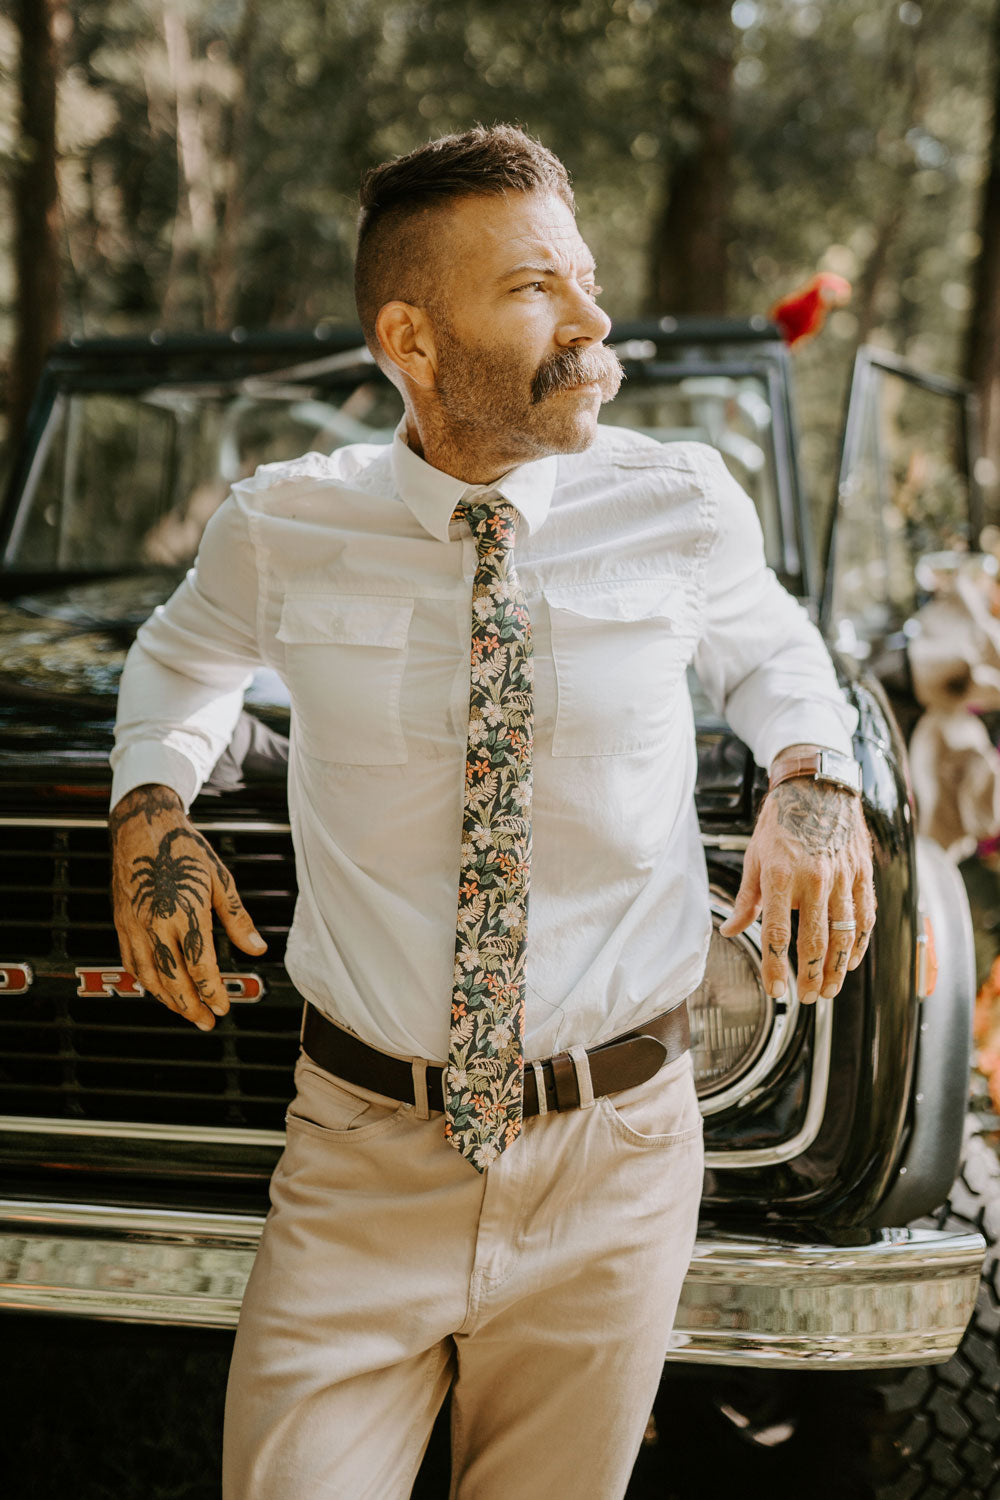 Jumanji Tie worn with a white shirt and tan pants.